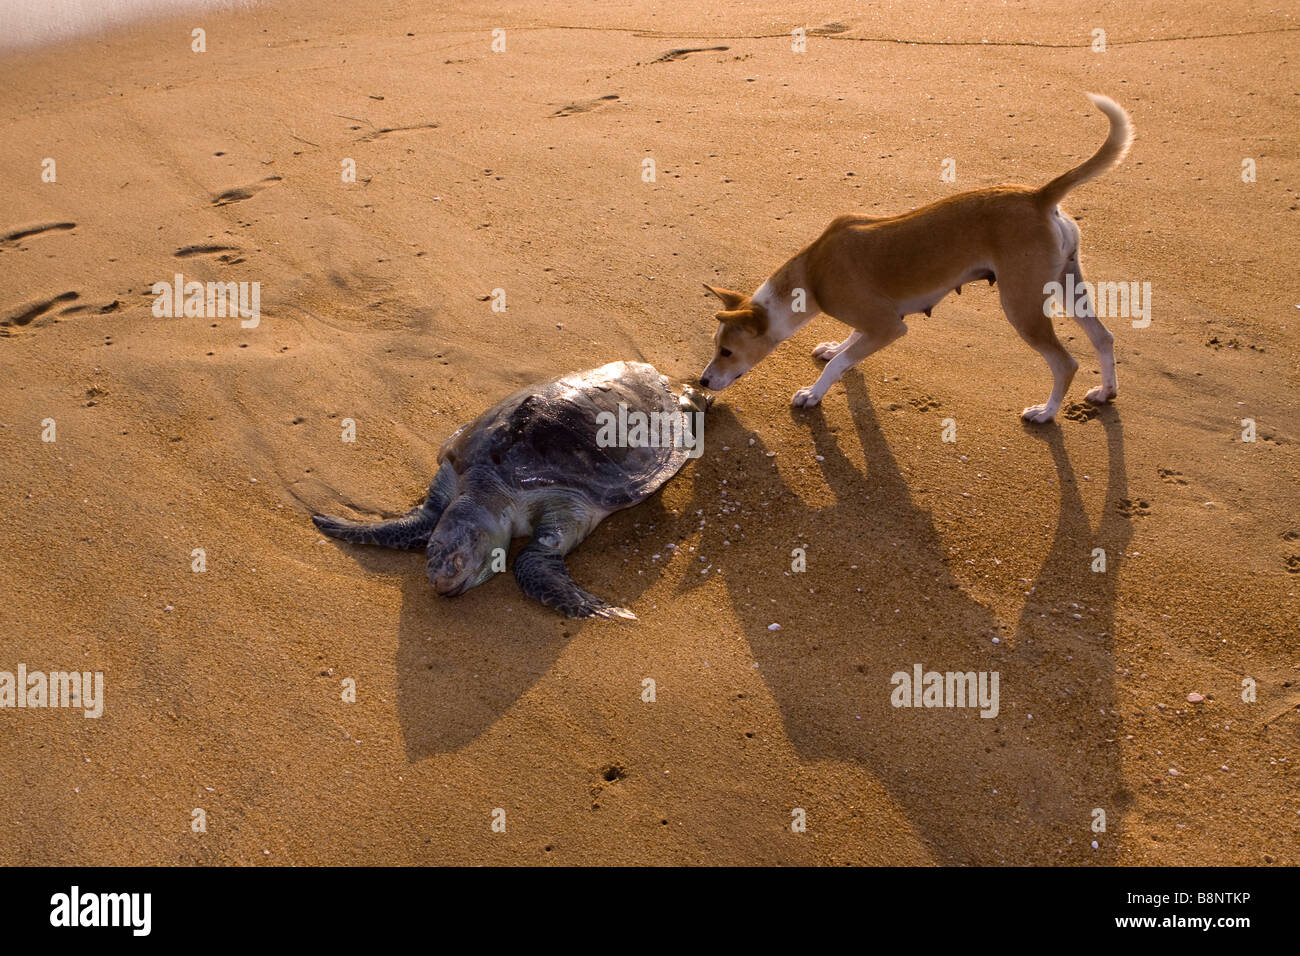 India Tamil Nadu Mamallapuram fishing village dog sniffing dead Olive Ridley Turtle on beach Stock Photo